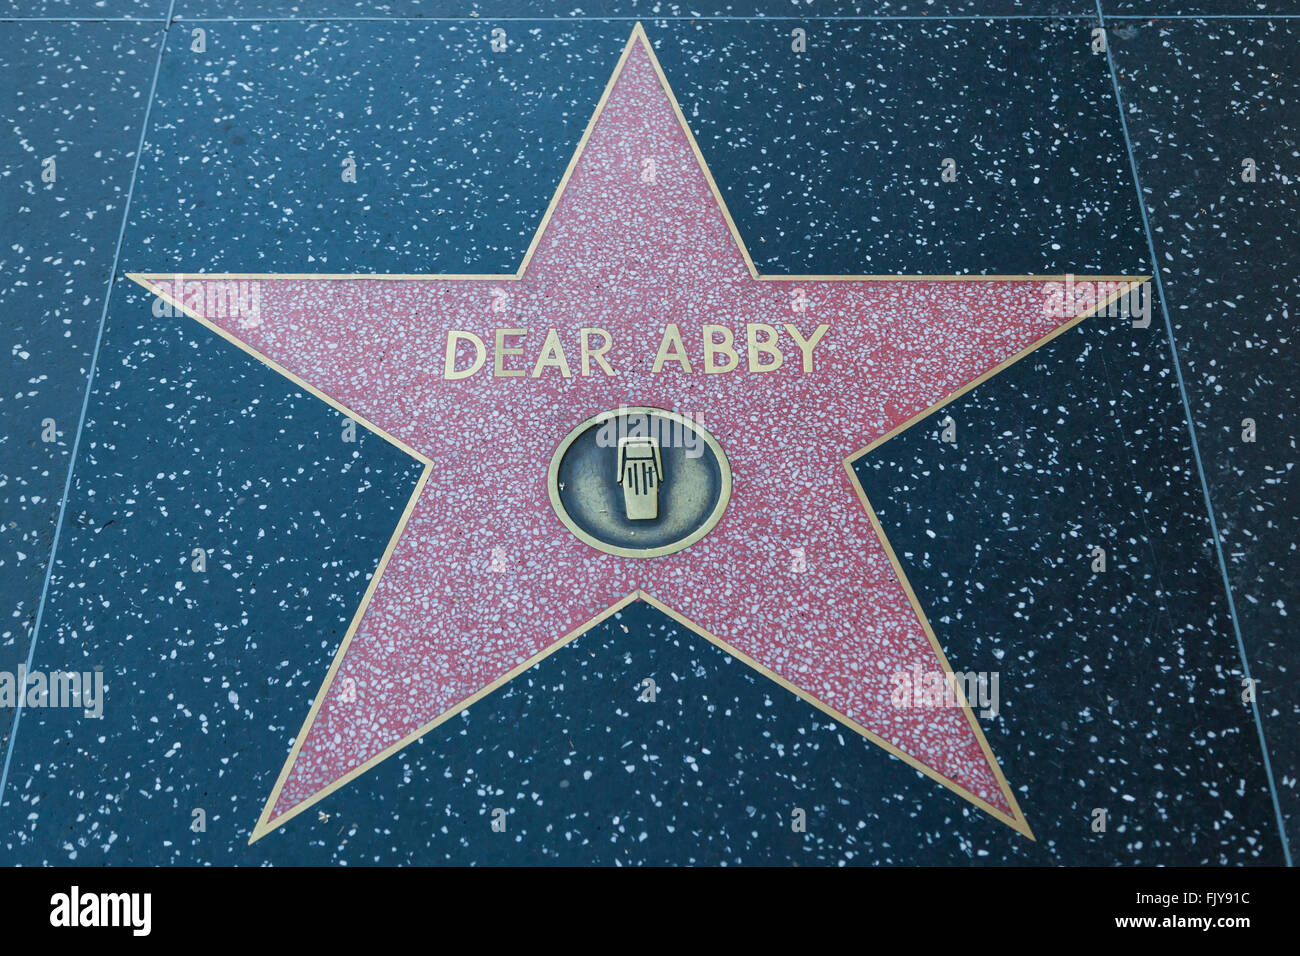 HOLLYWOOD, Kalifornien - 8. Februar 2015: Dear Abby Hollywood Walk of Fame Stern am 8. Februar 2015 in Hollywood, Kalifornien. Stockfoto